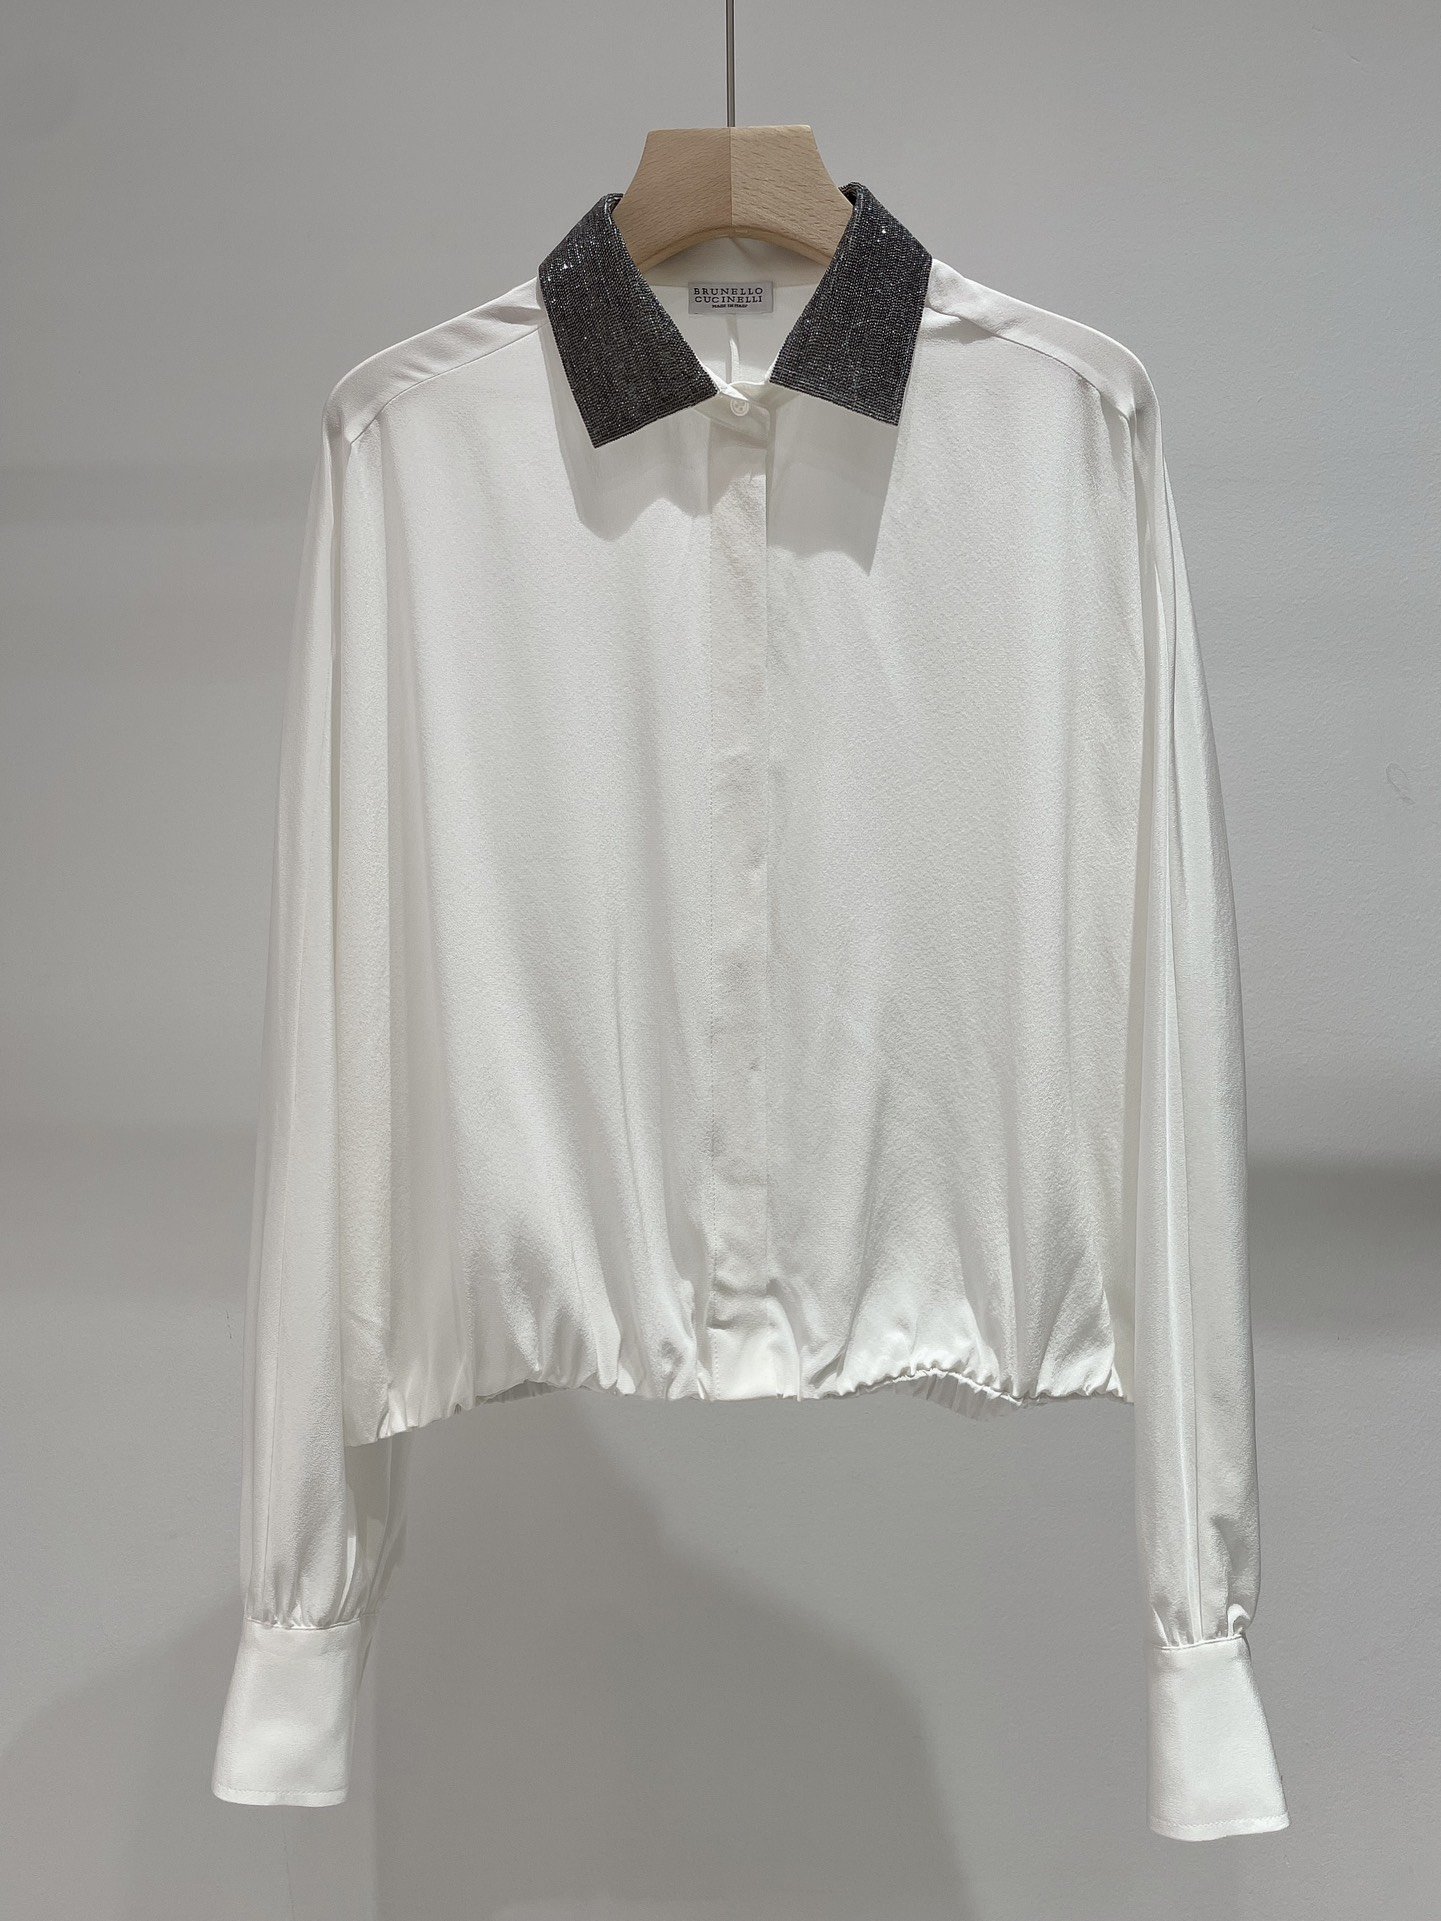 BC重工钉珠衬衫100%真丝超精致百搭款黑色白色SML具体价格咨询客服